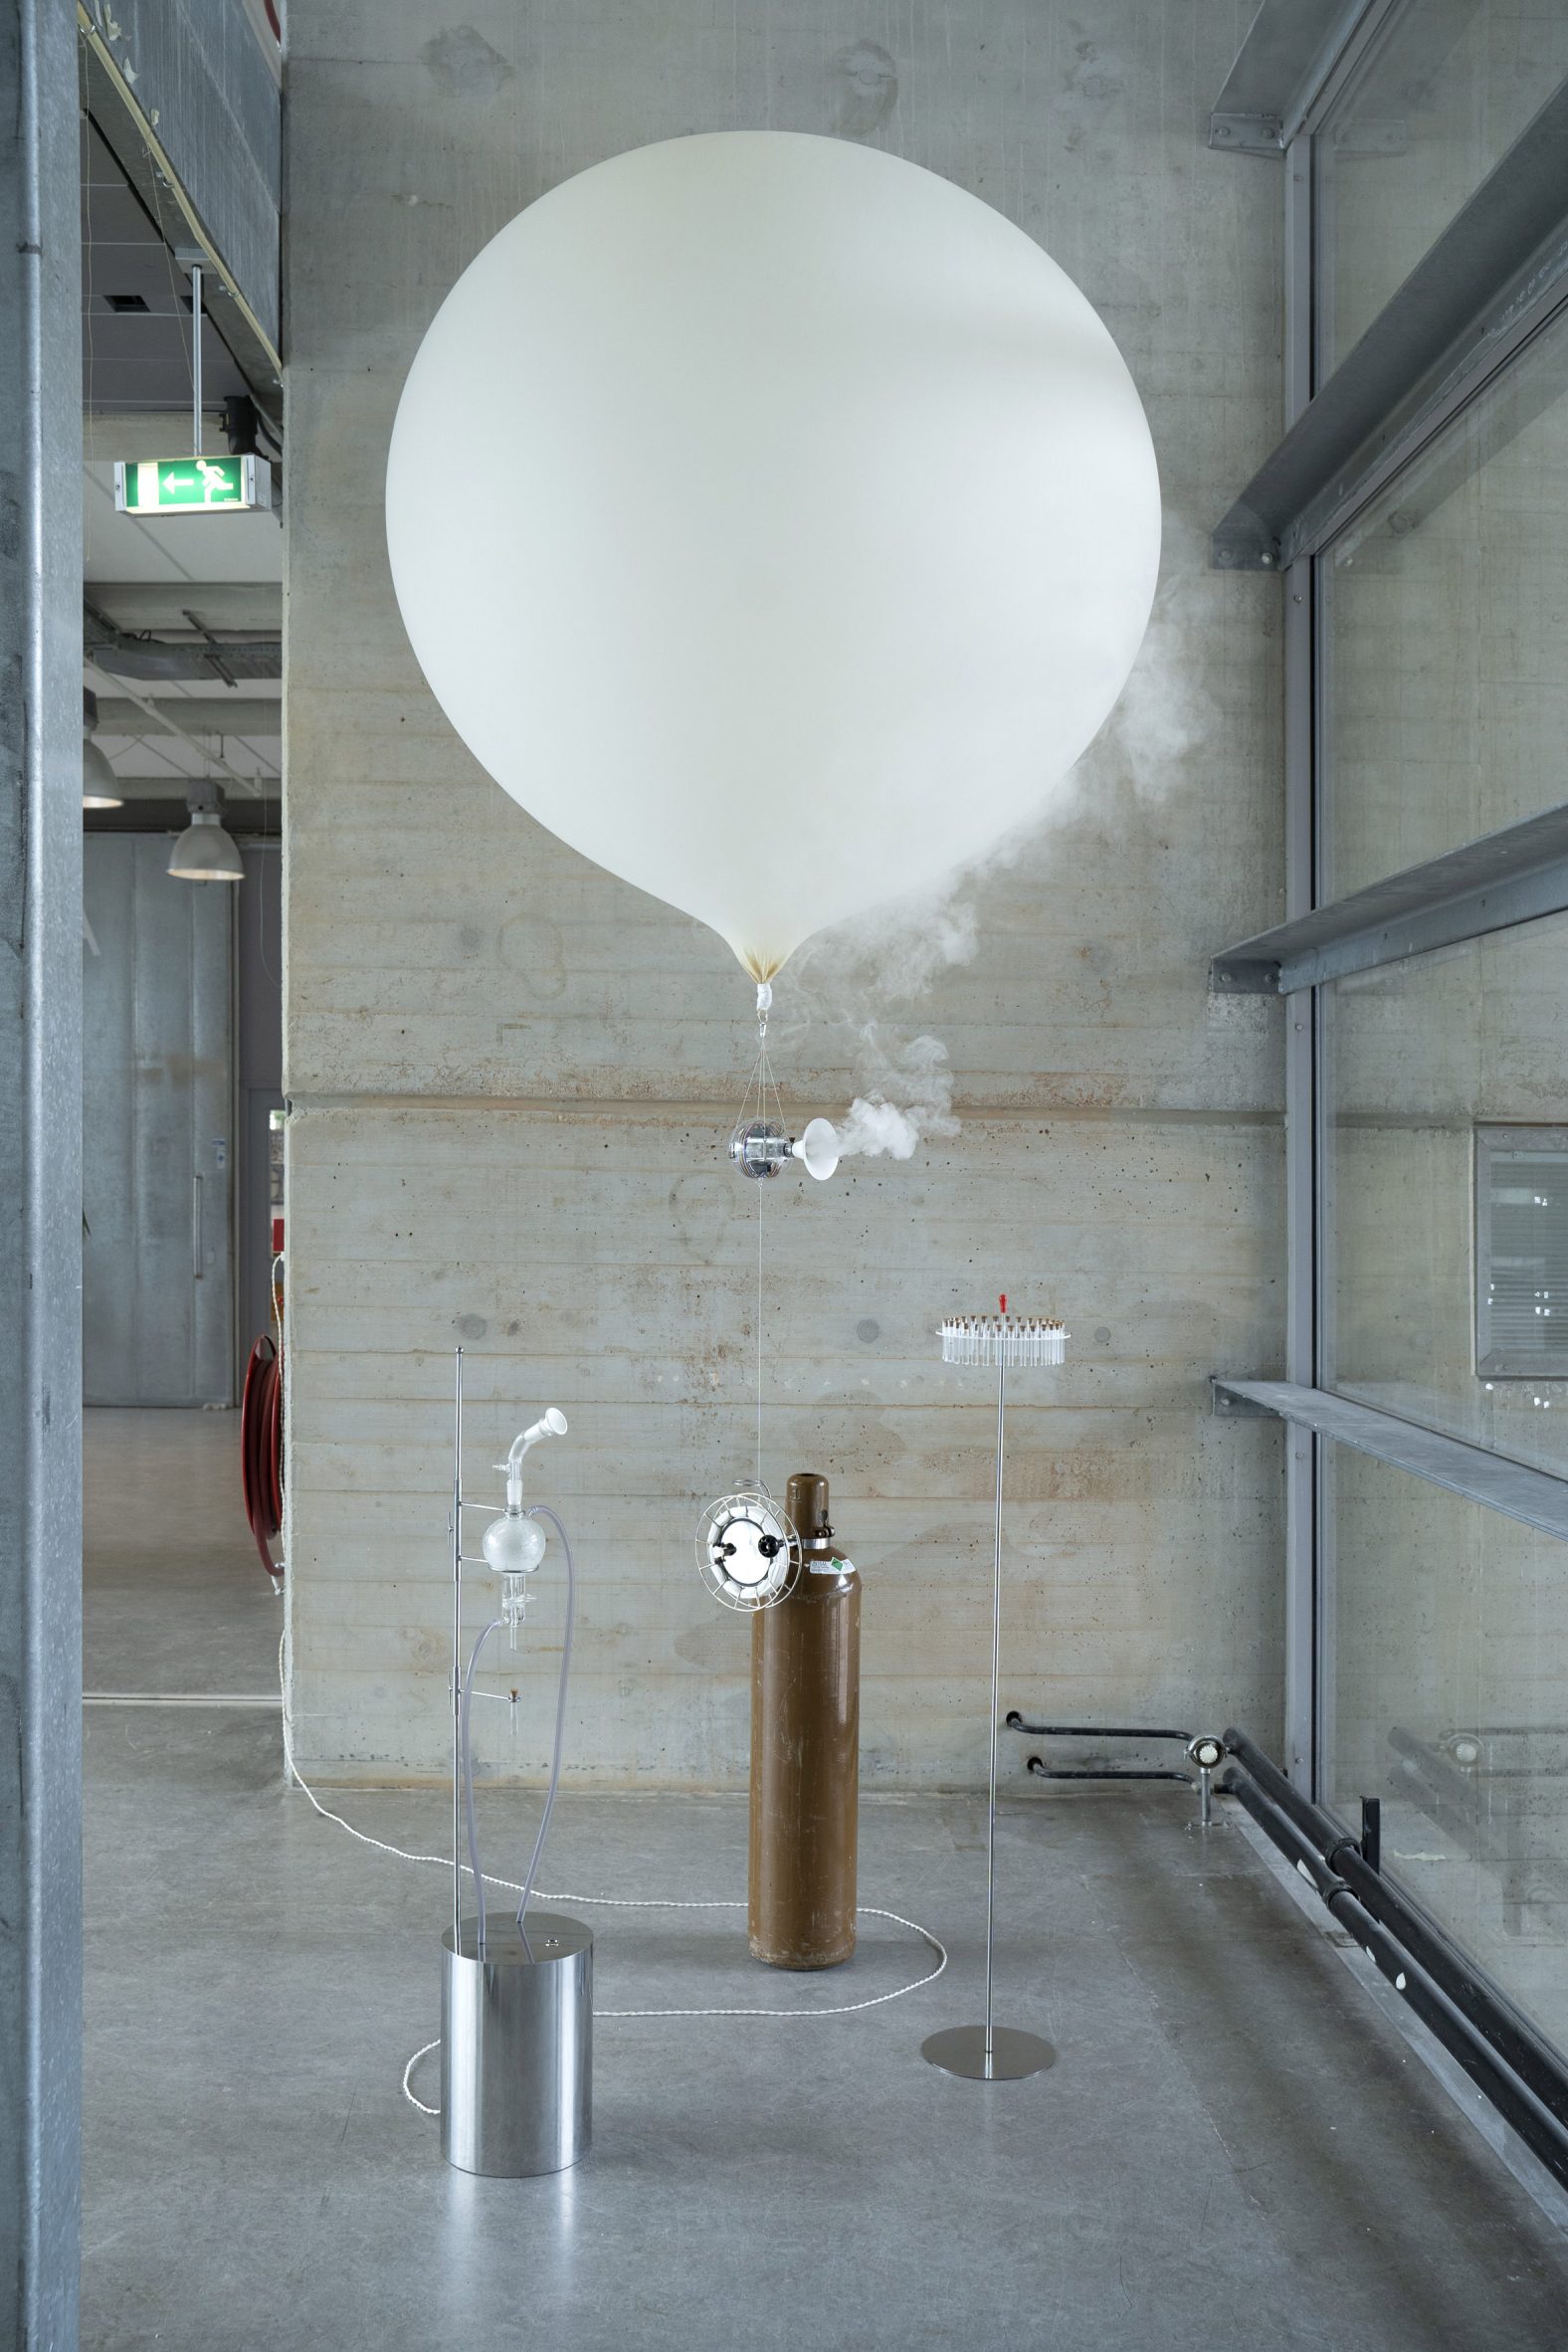 Weather balloon in Human-Cloud Project by Filips Staņislavskis